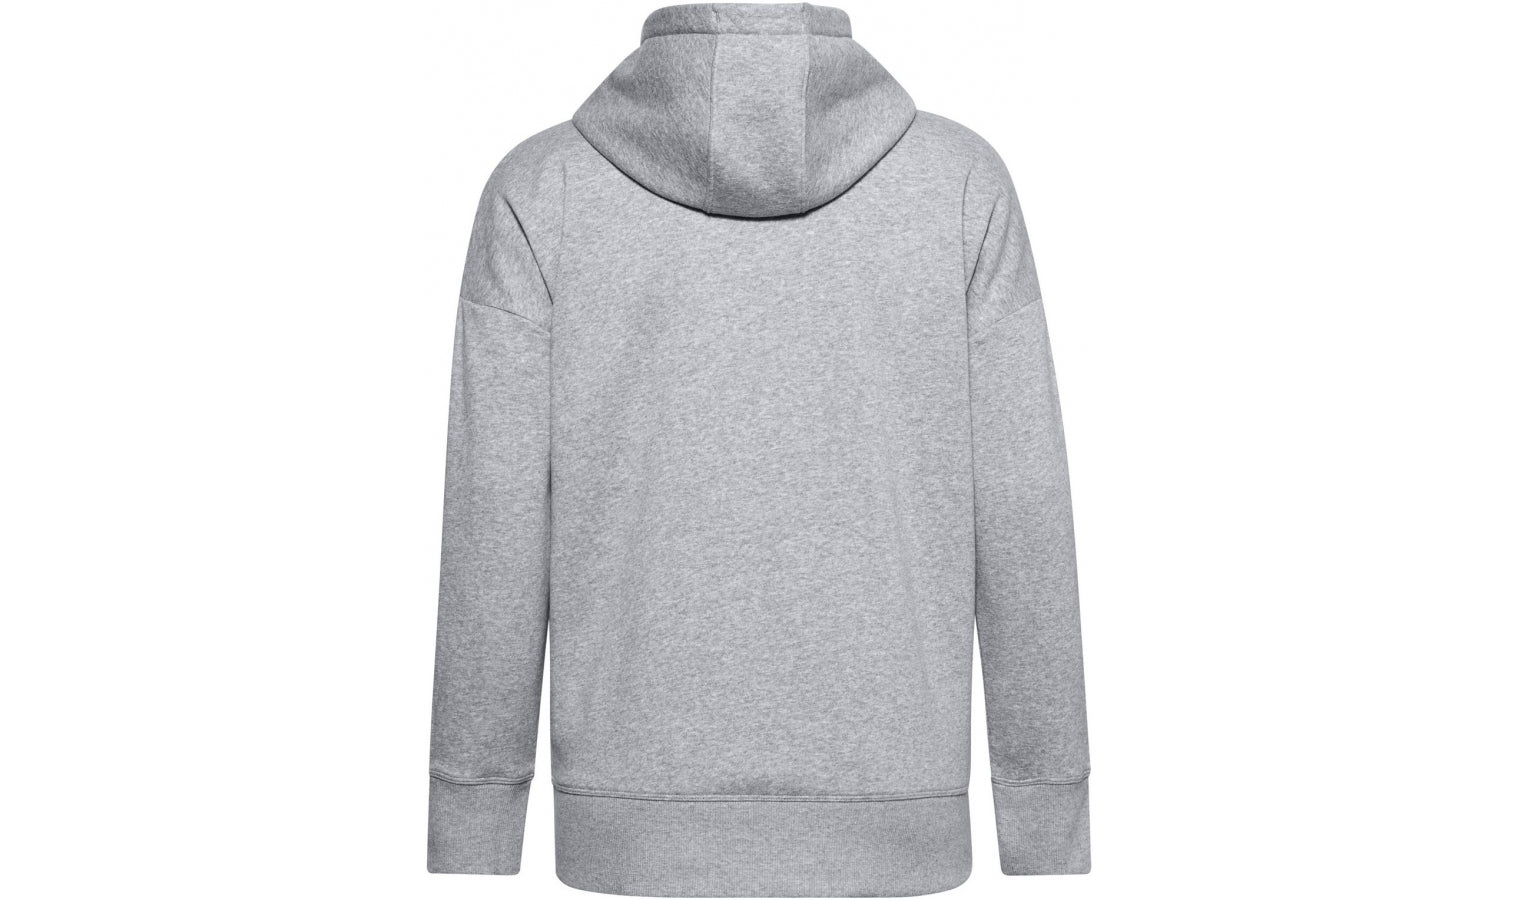 Womens sports sweatshirt rival fleece fz hoodie - grey